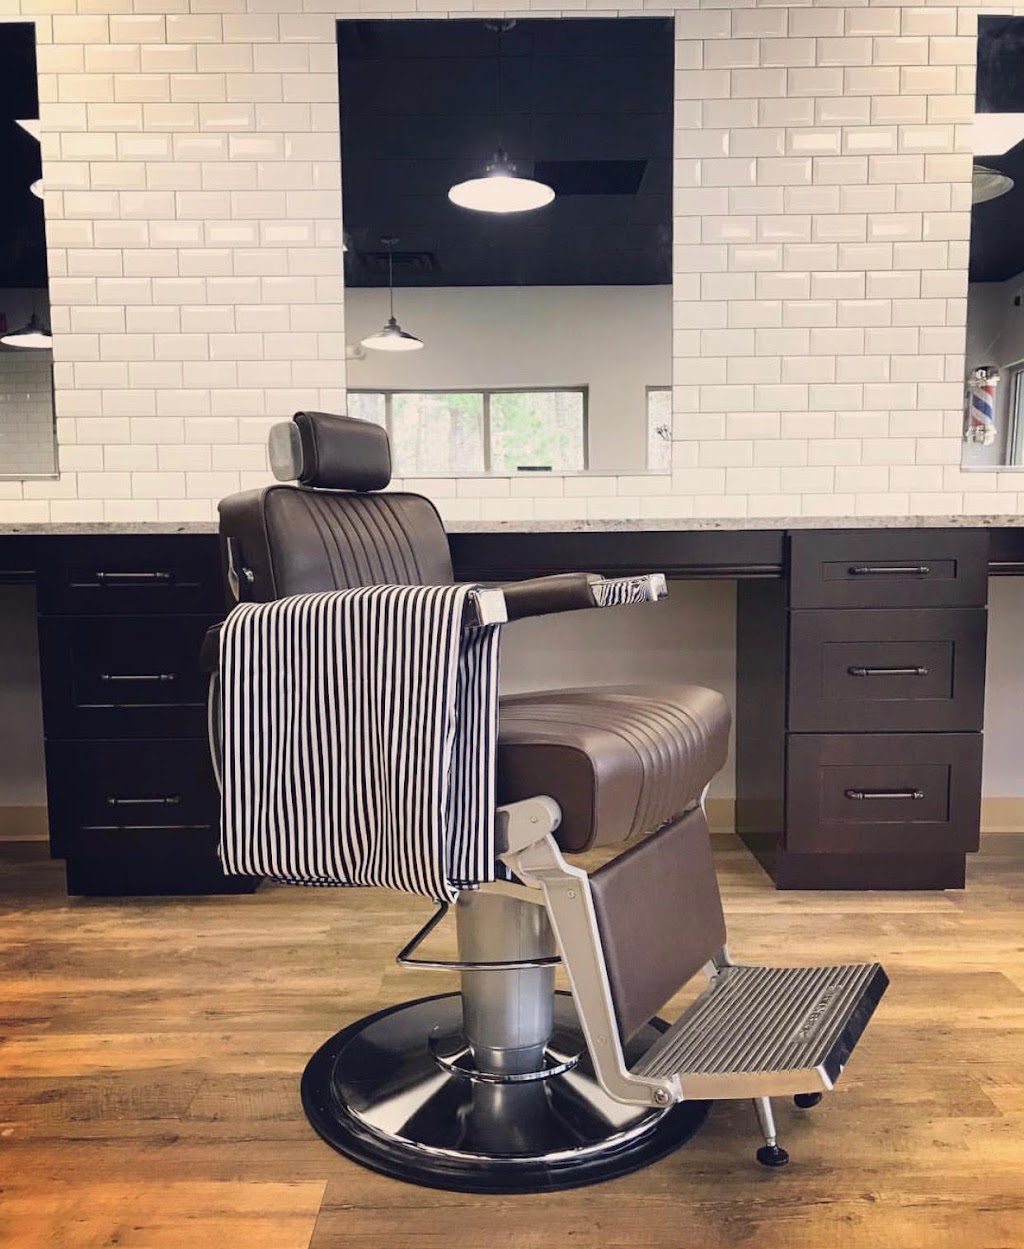 Conos Cuts Barber Shop | 494 Monmouth Rd, Millstone, NJ 08510 | Phone: (609) 259-2211